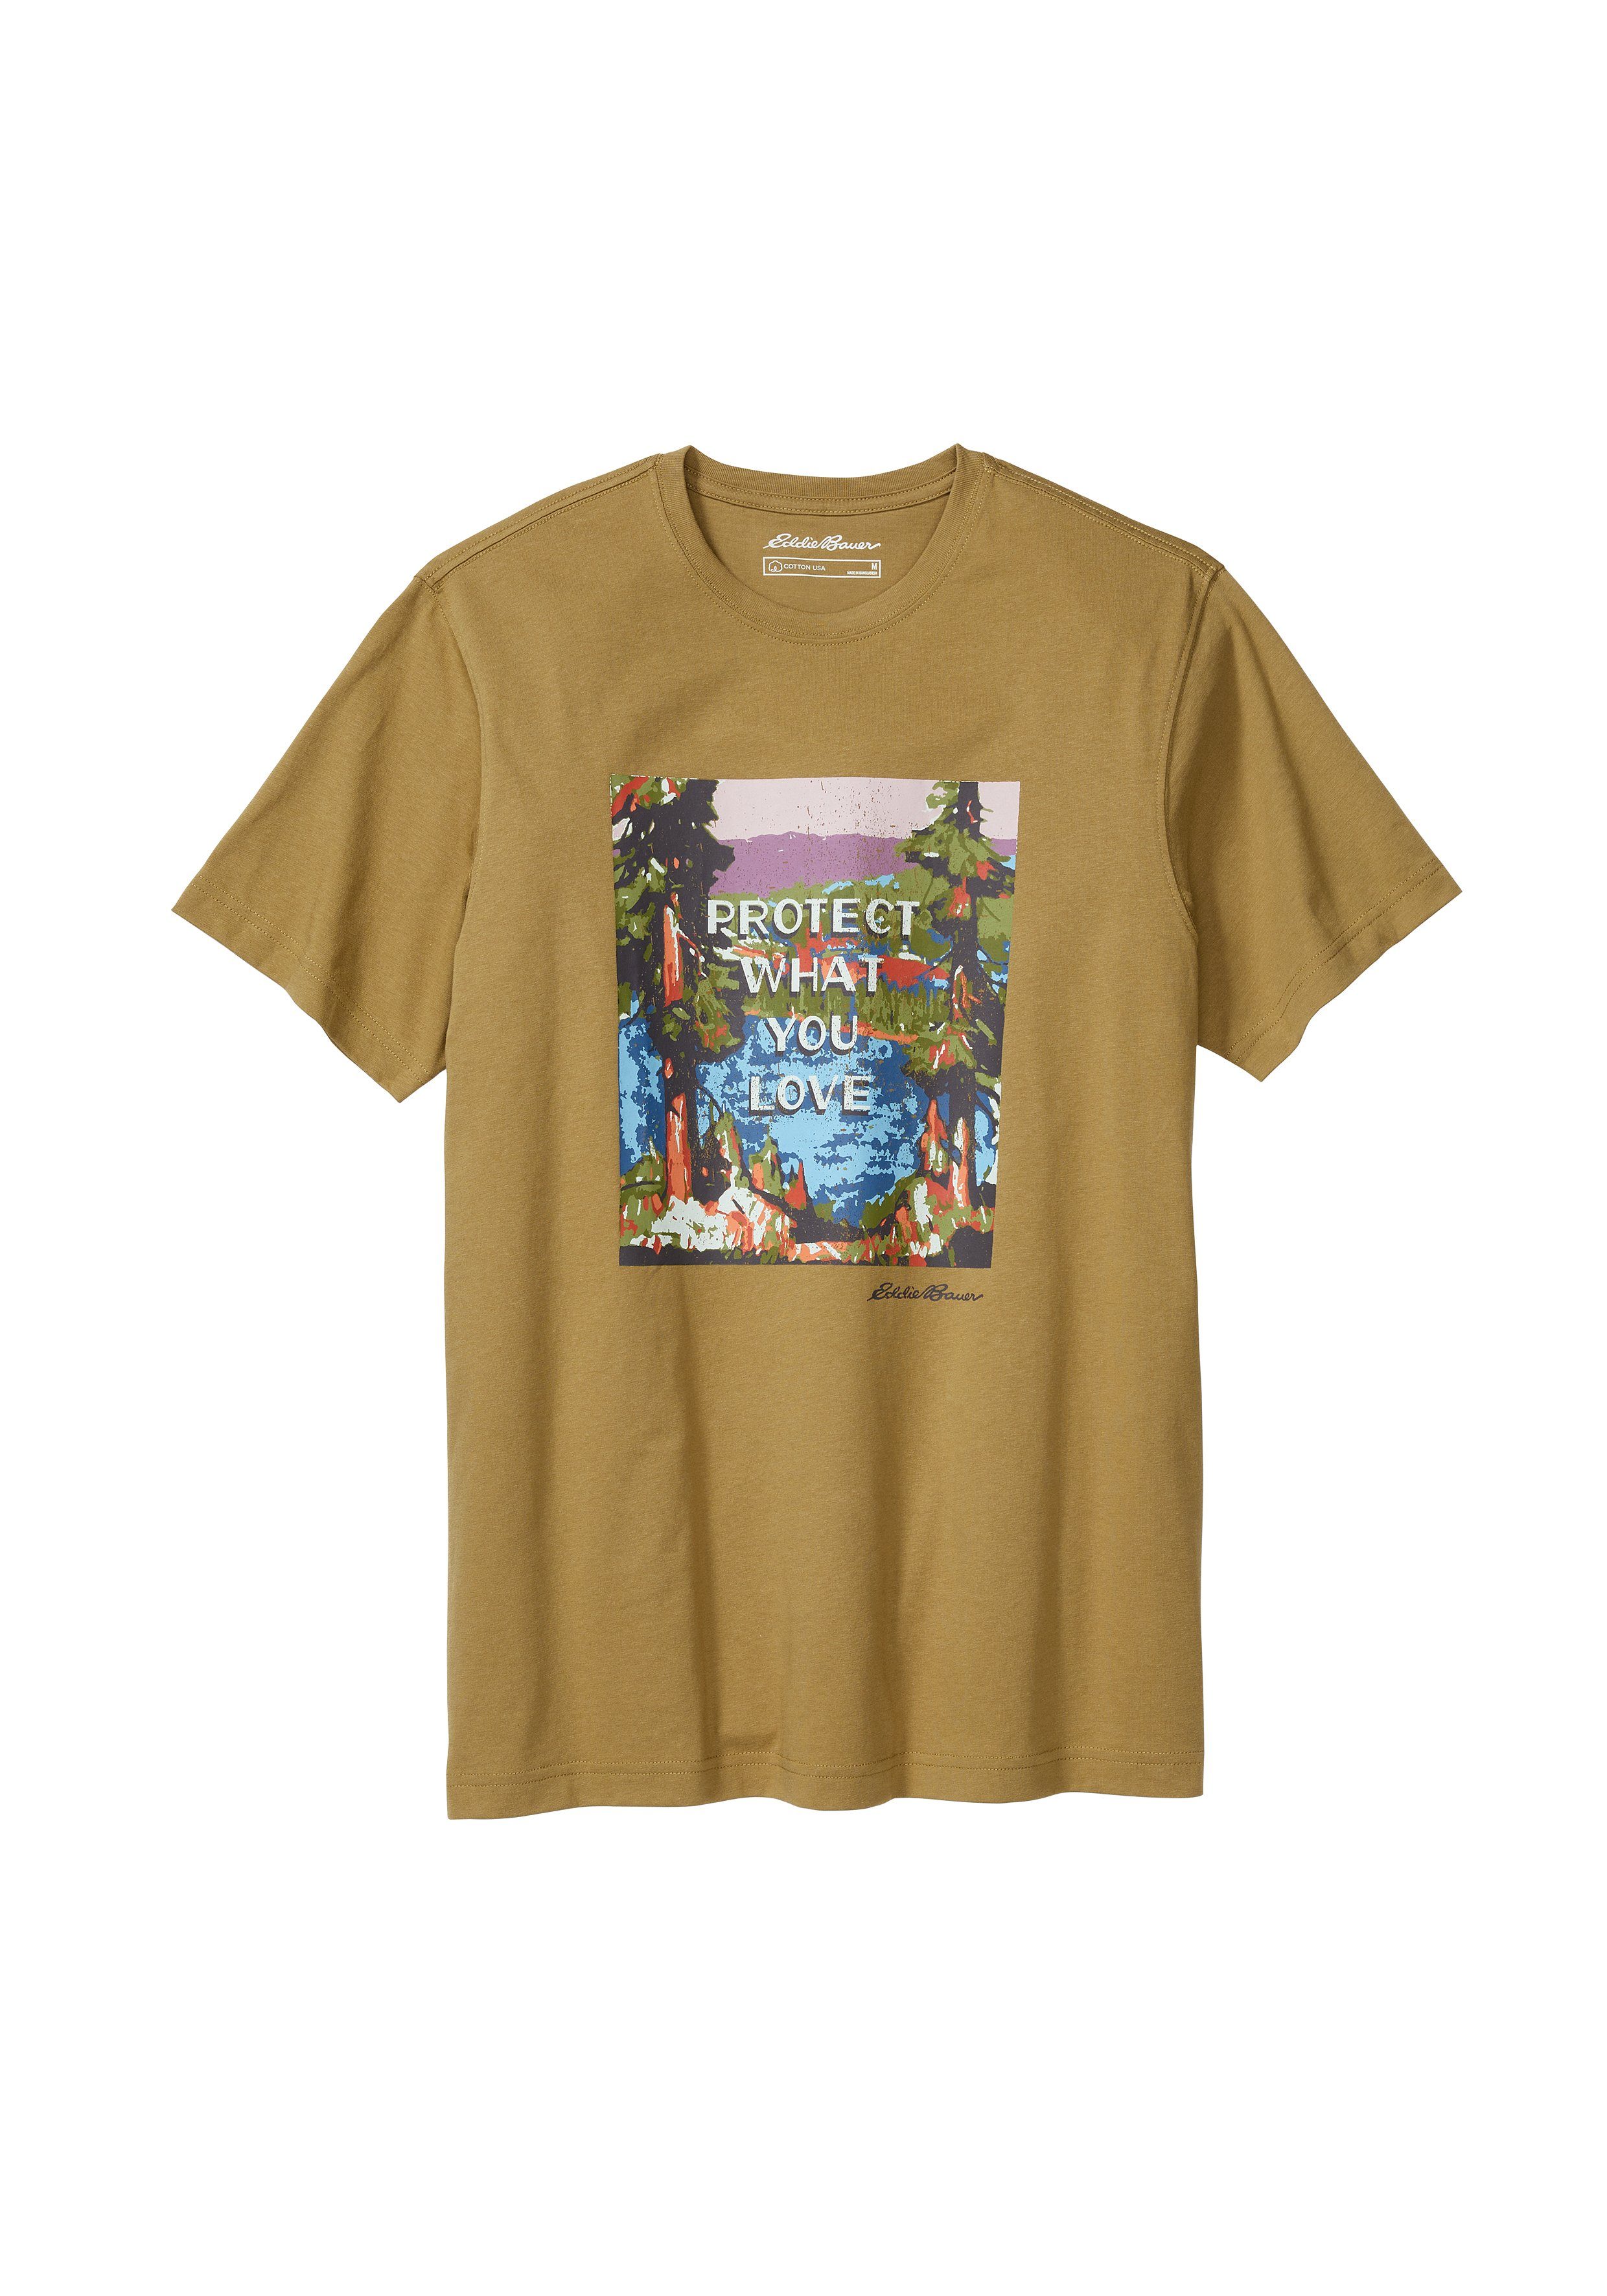 Eddie Bauer T-Shirt T-Shirt Graphic - Protect